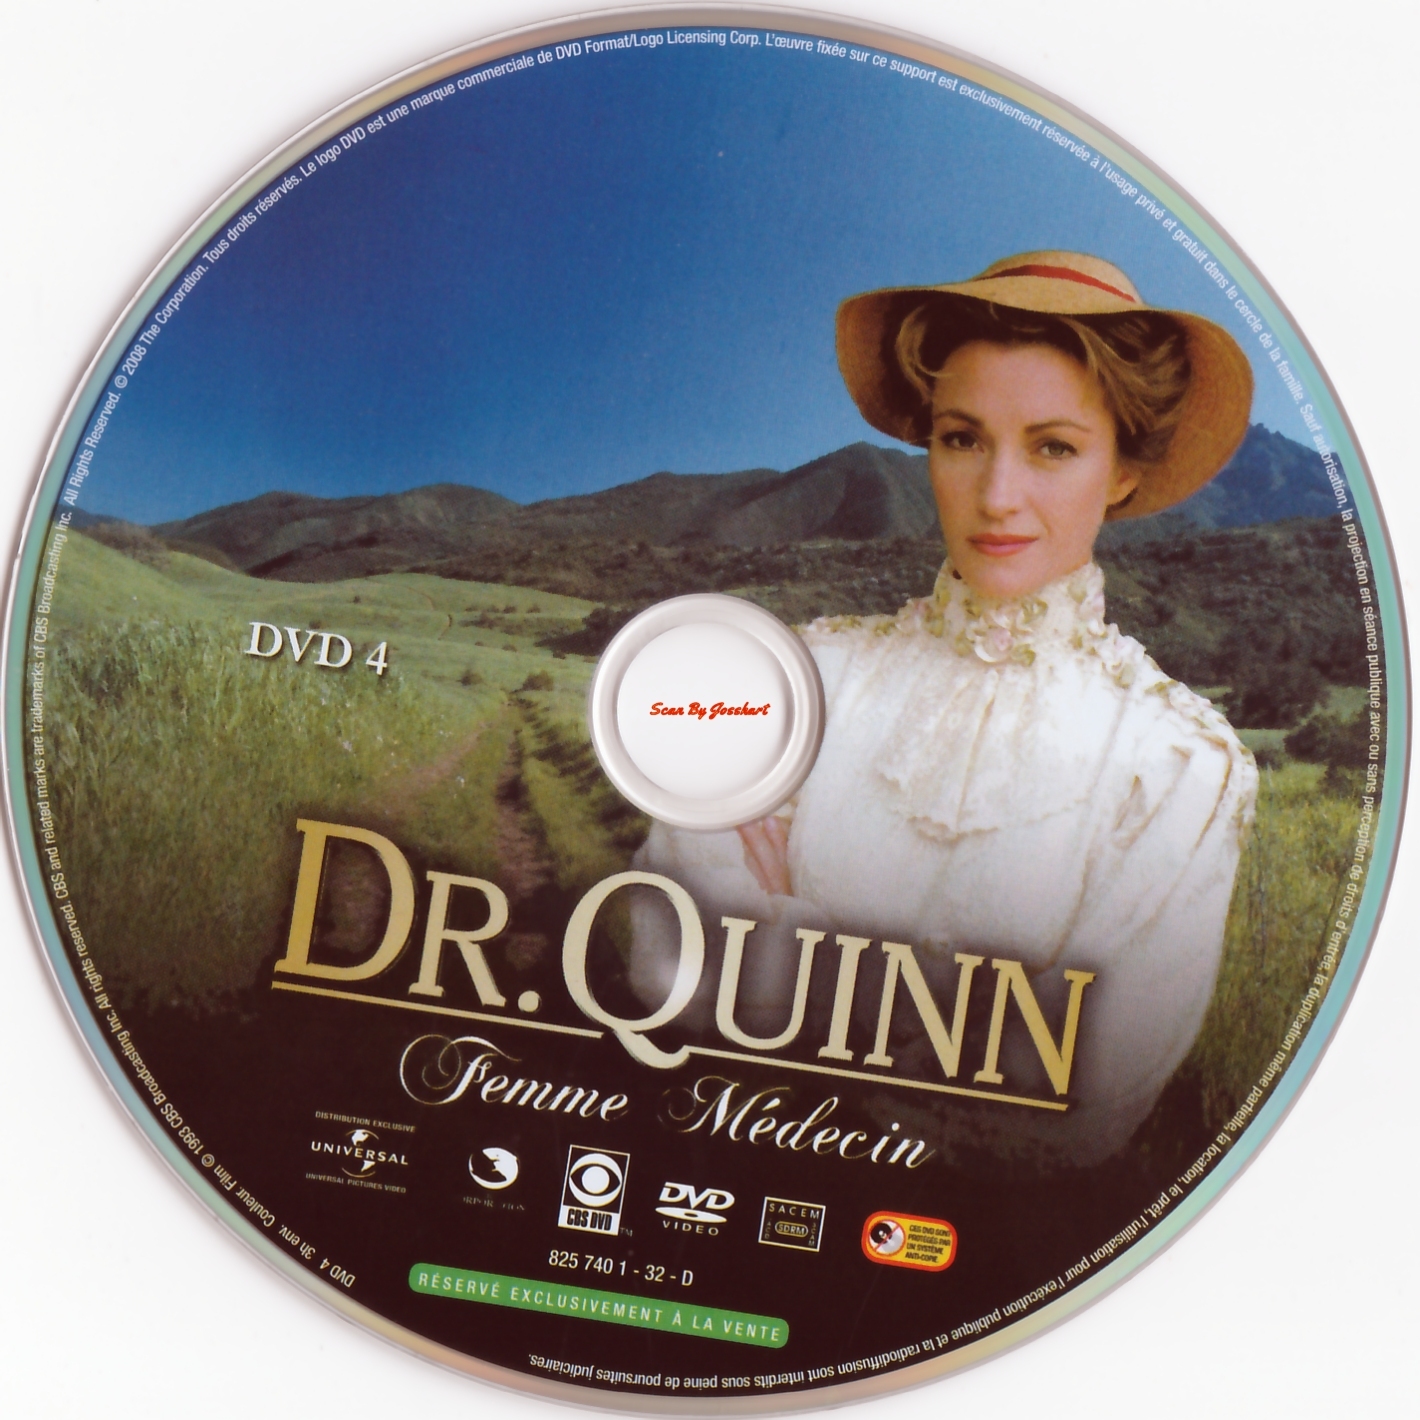 Docteur Quinn femme mdecin - Integrale Saison 1 DISC 4